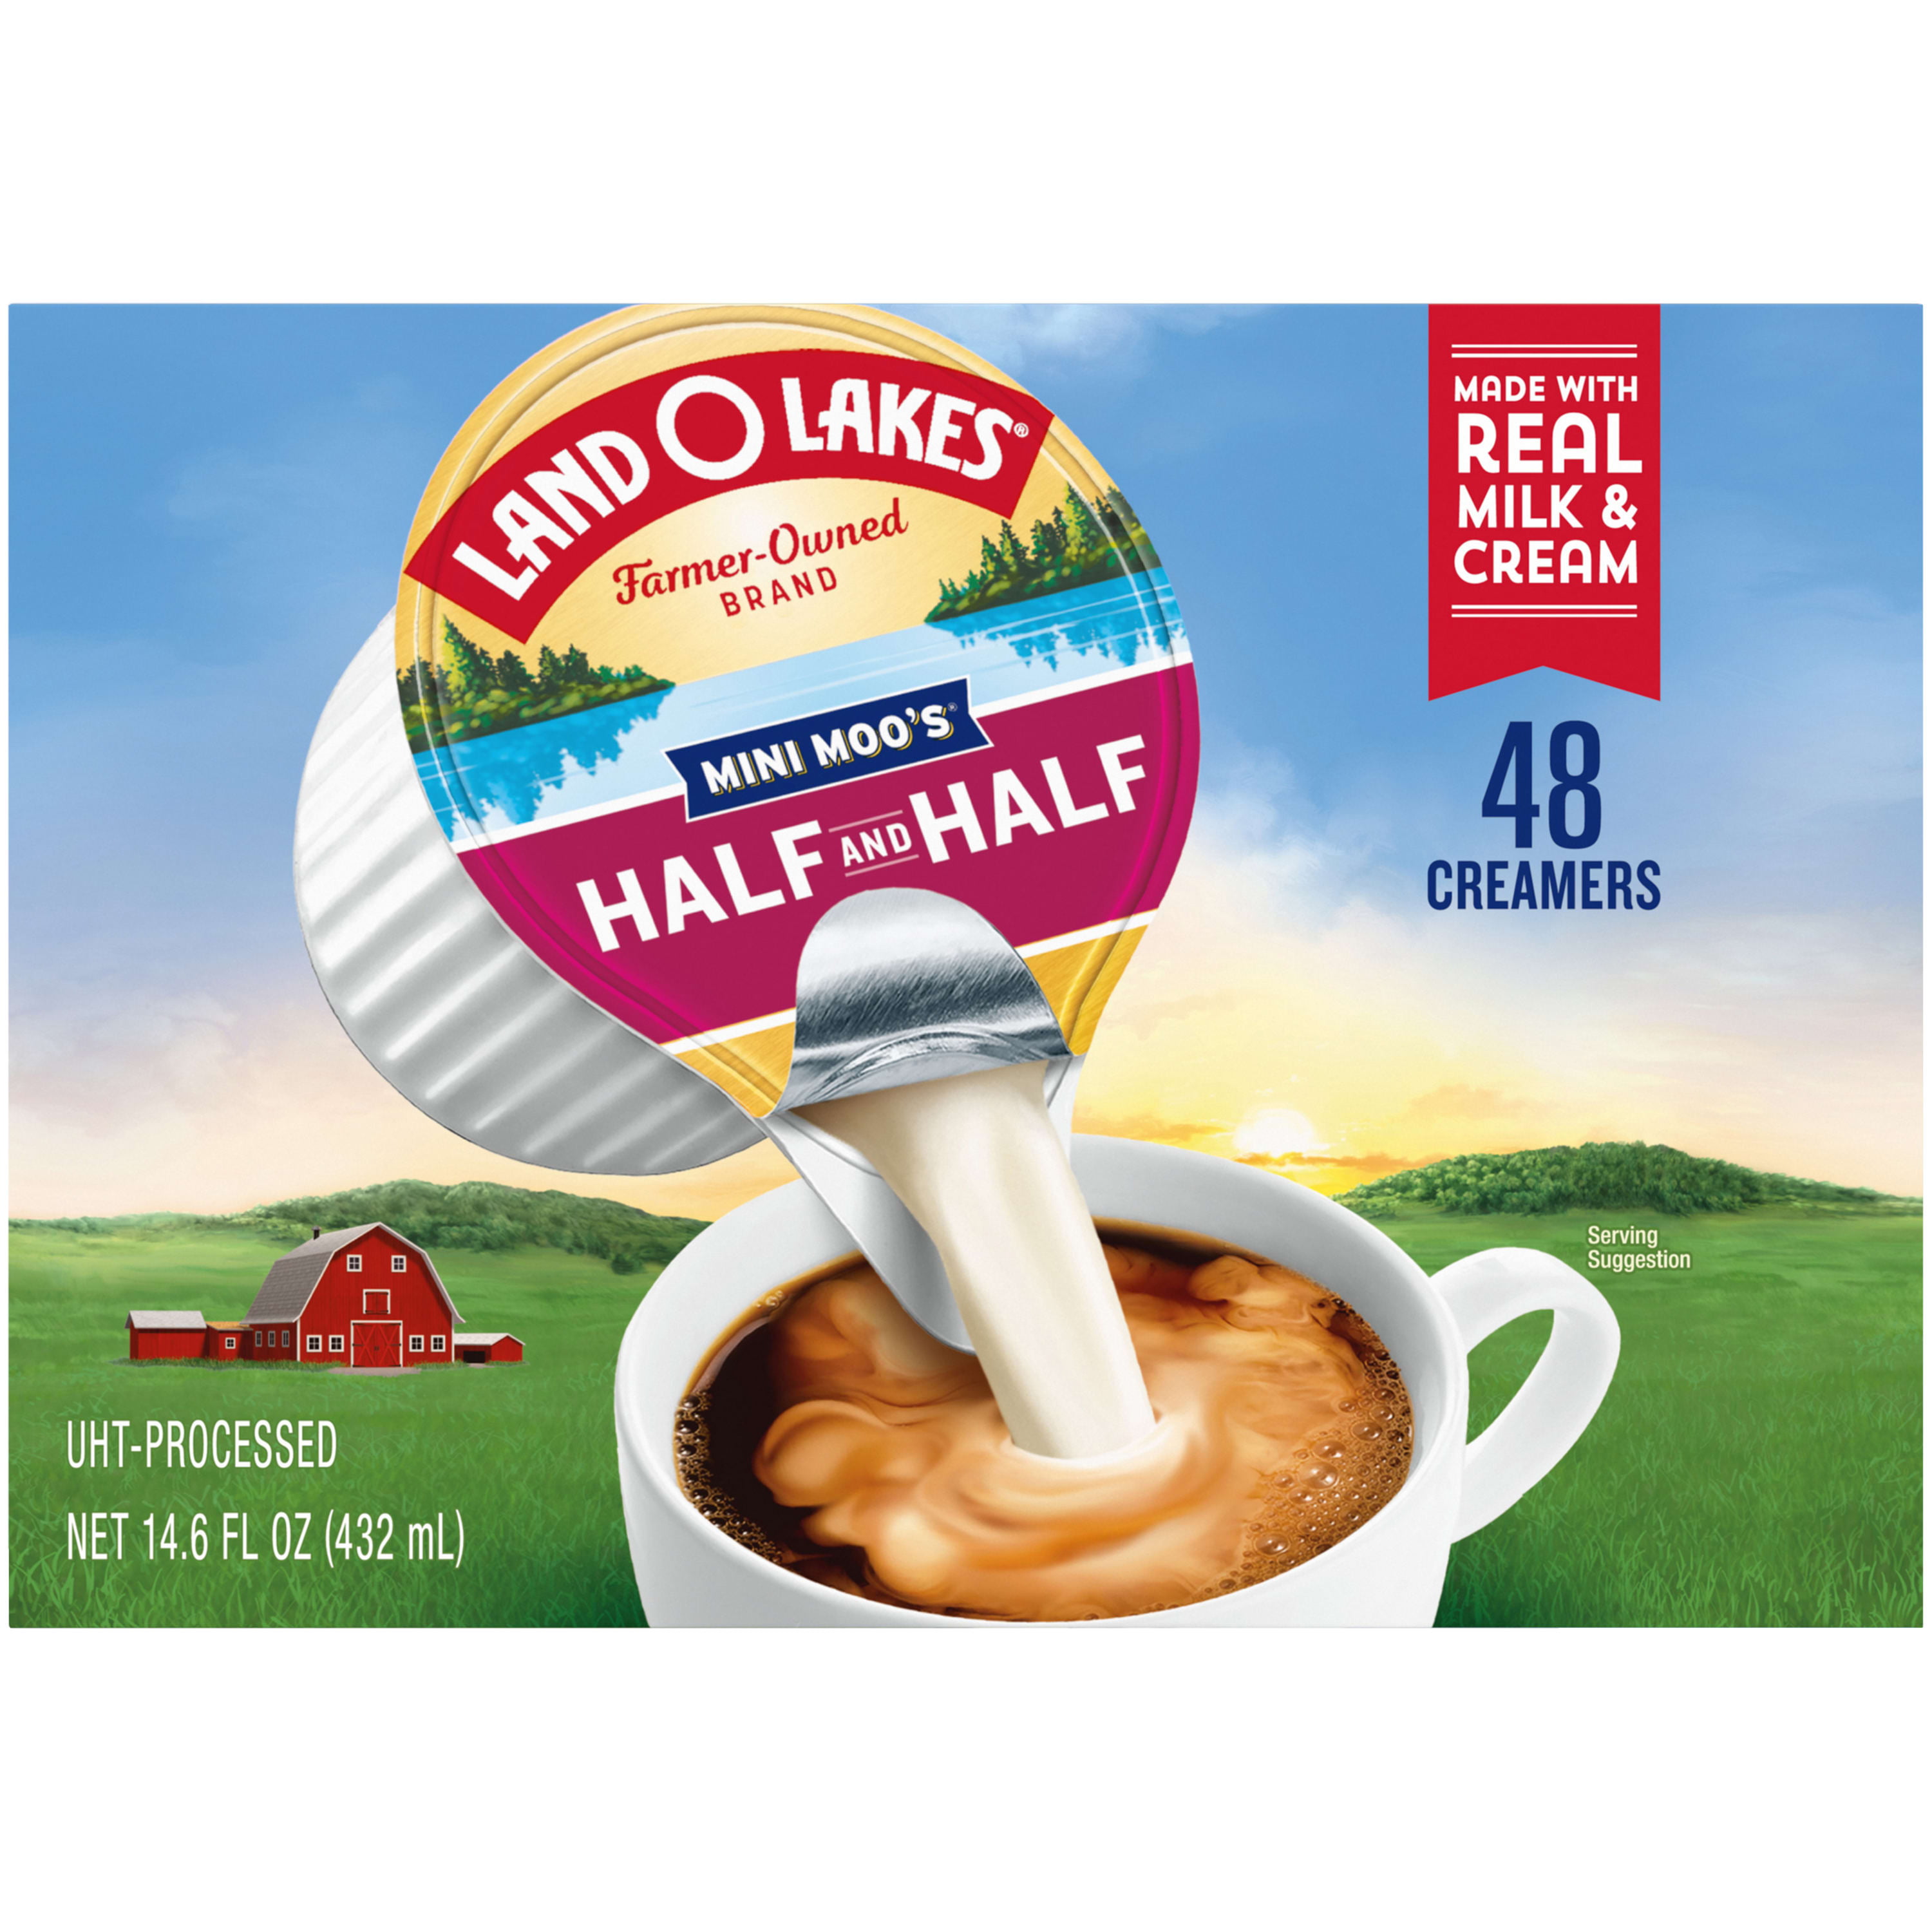  Land O' Lakes Half and Half UHT-Processed Creamer, 24